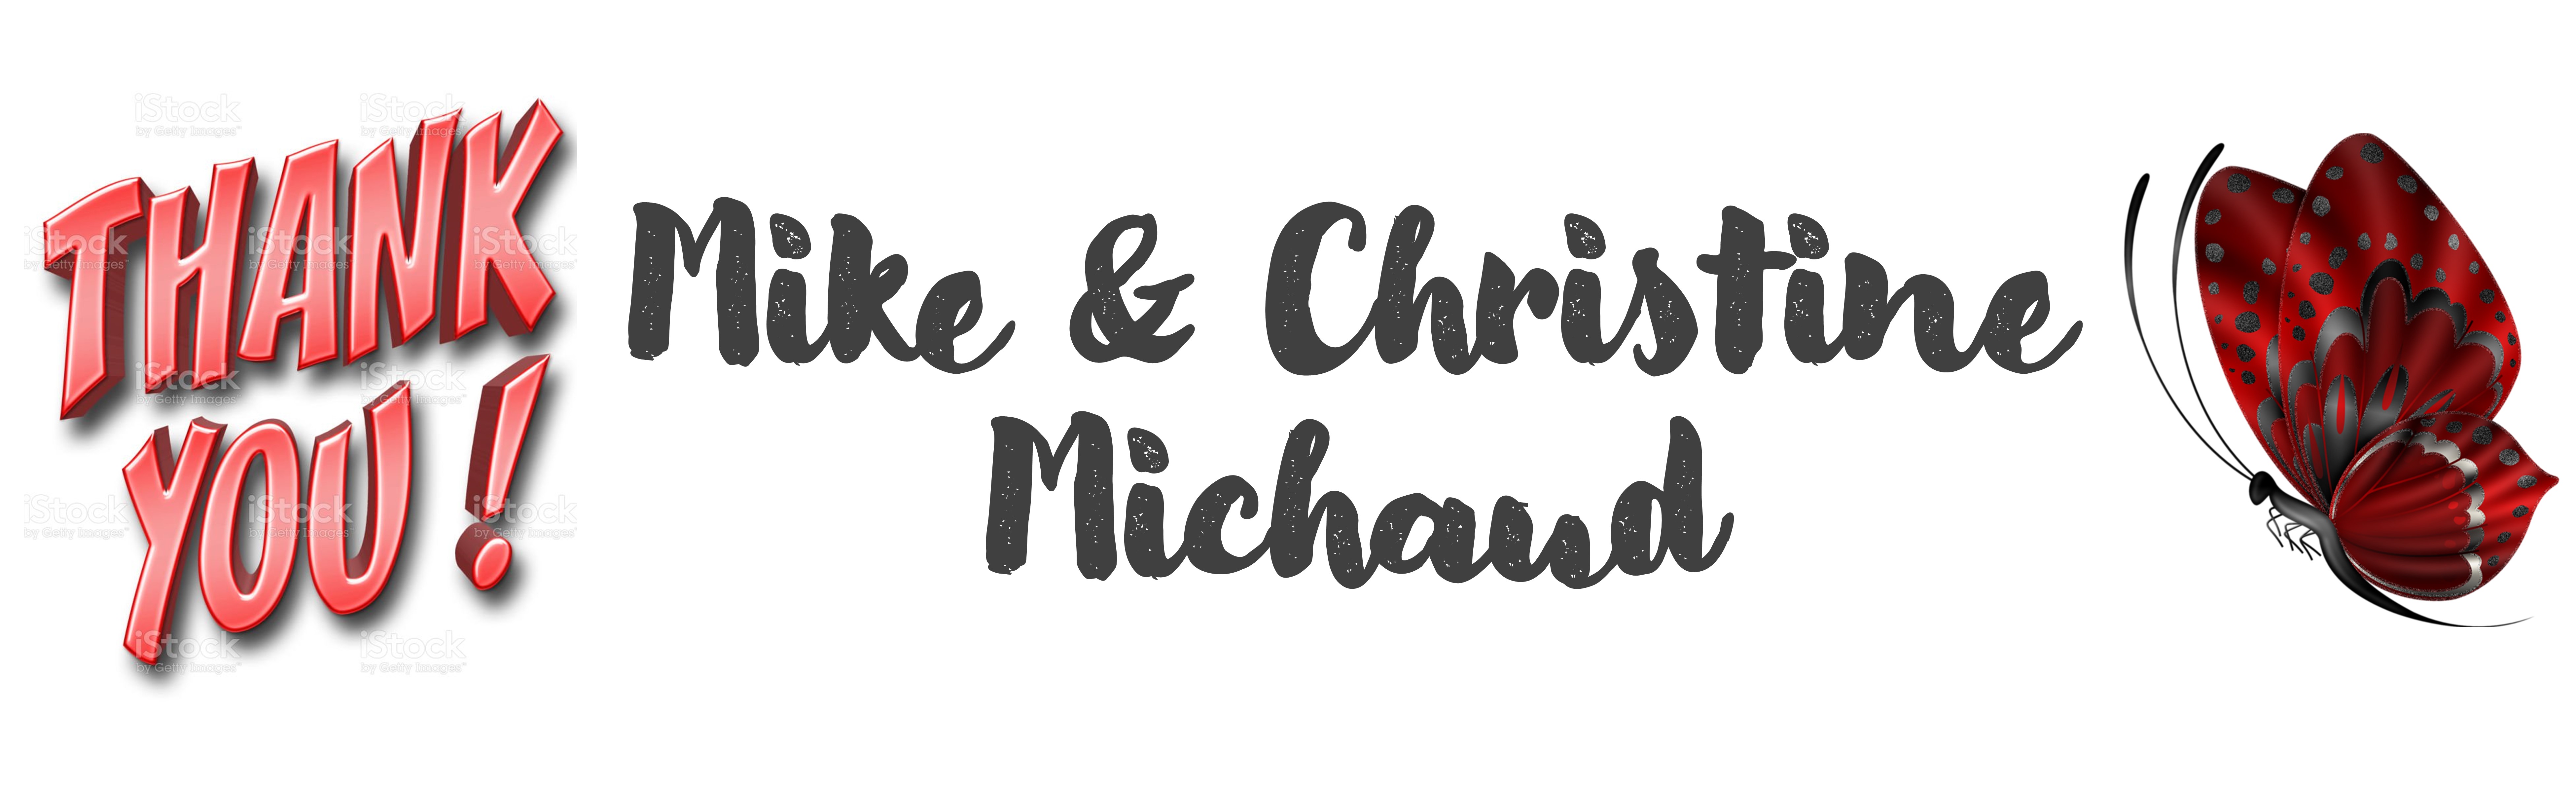 Mike & Christine Michaud